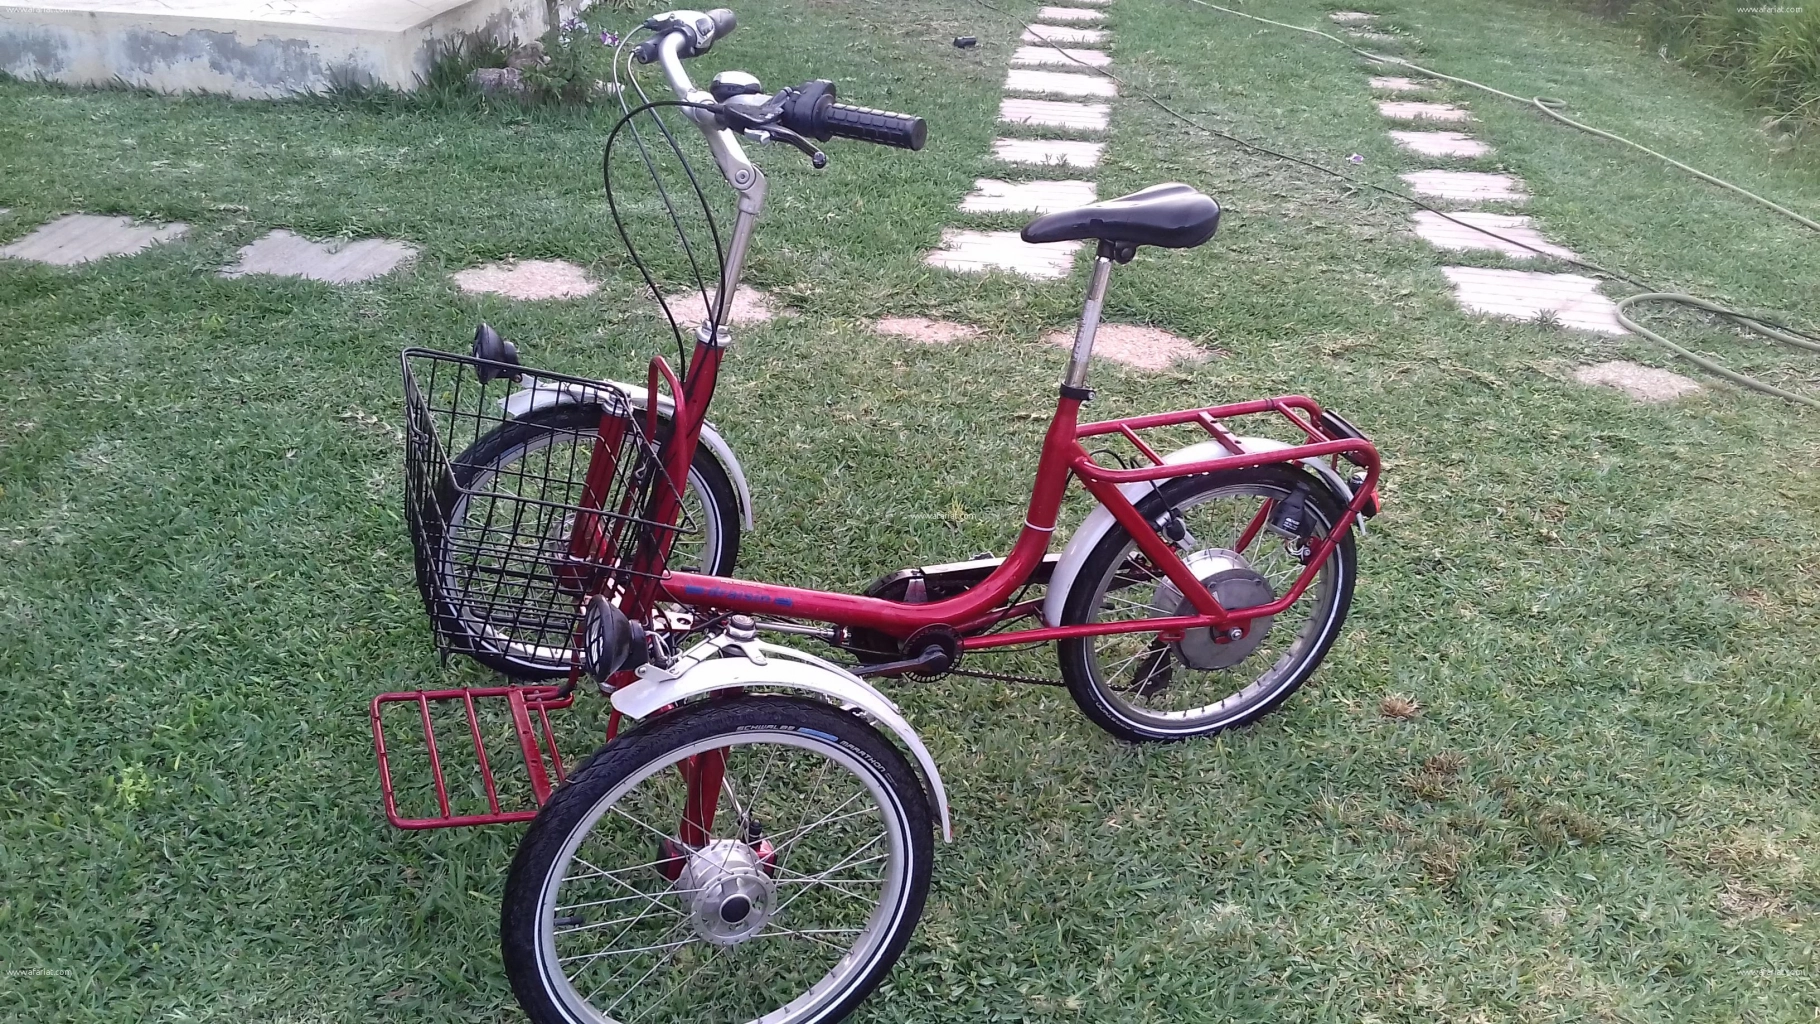 bicyclette a vendre tayara